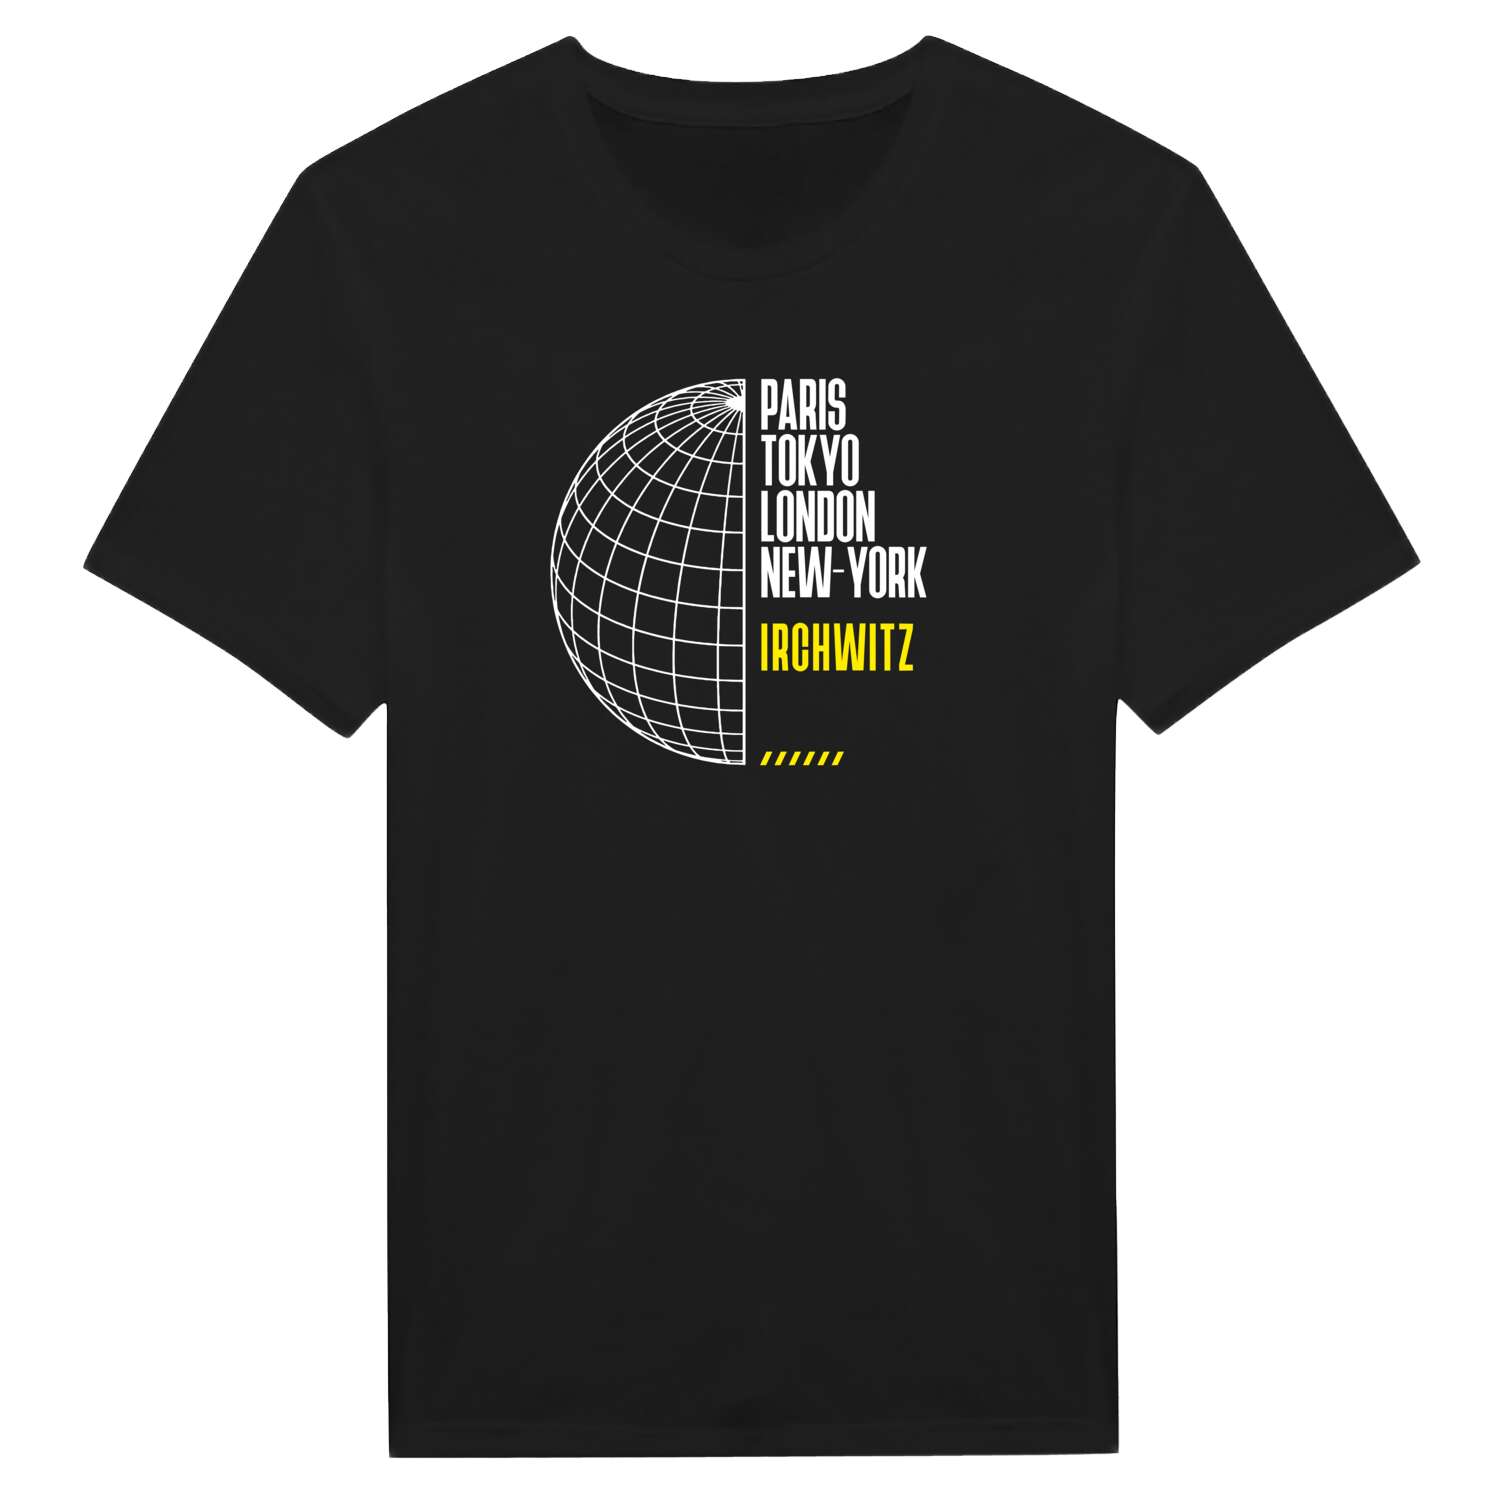 Irchwitz T-Shirt »Paris Tokyo London«